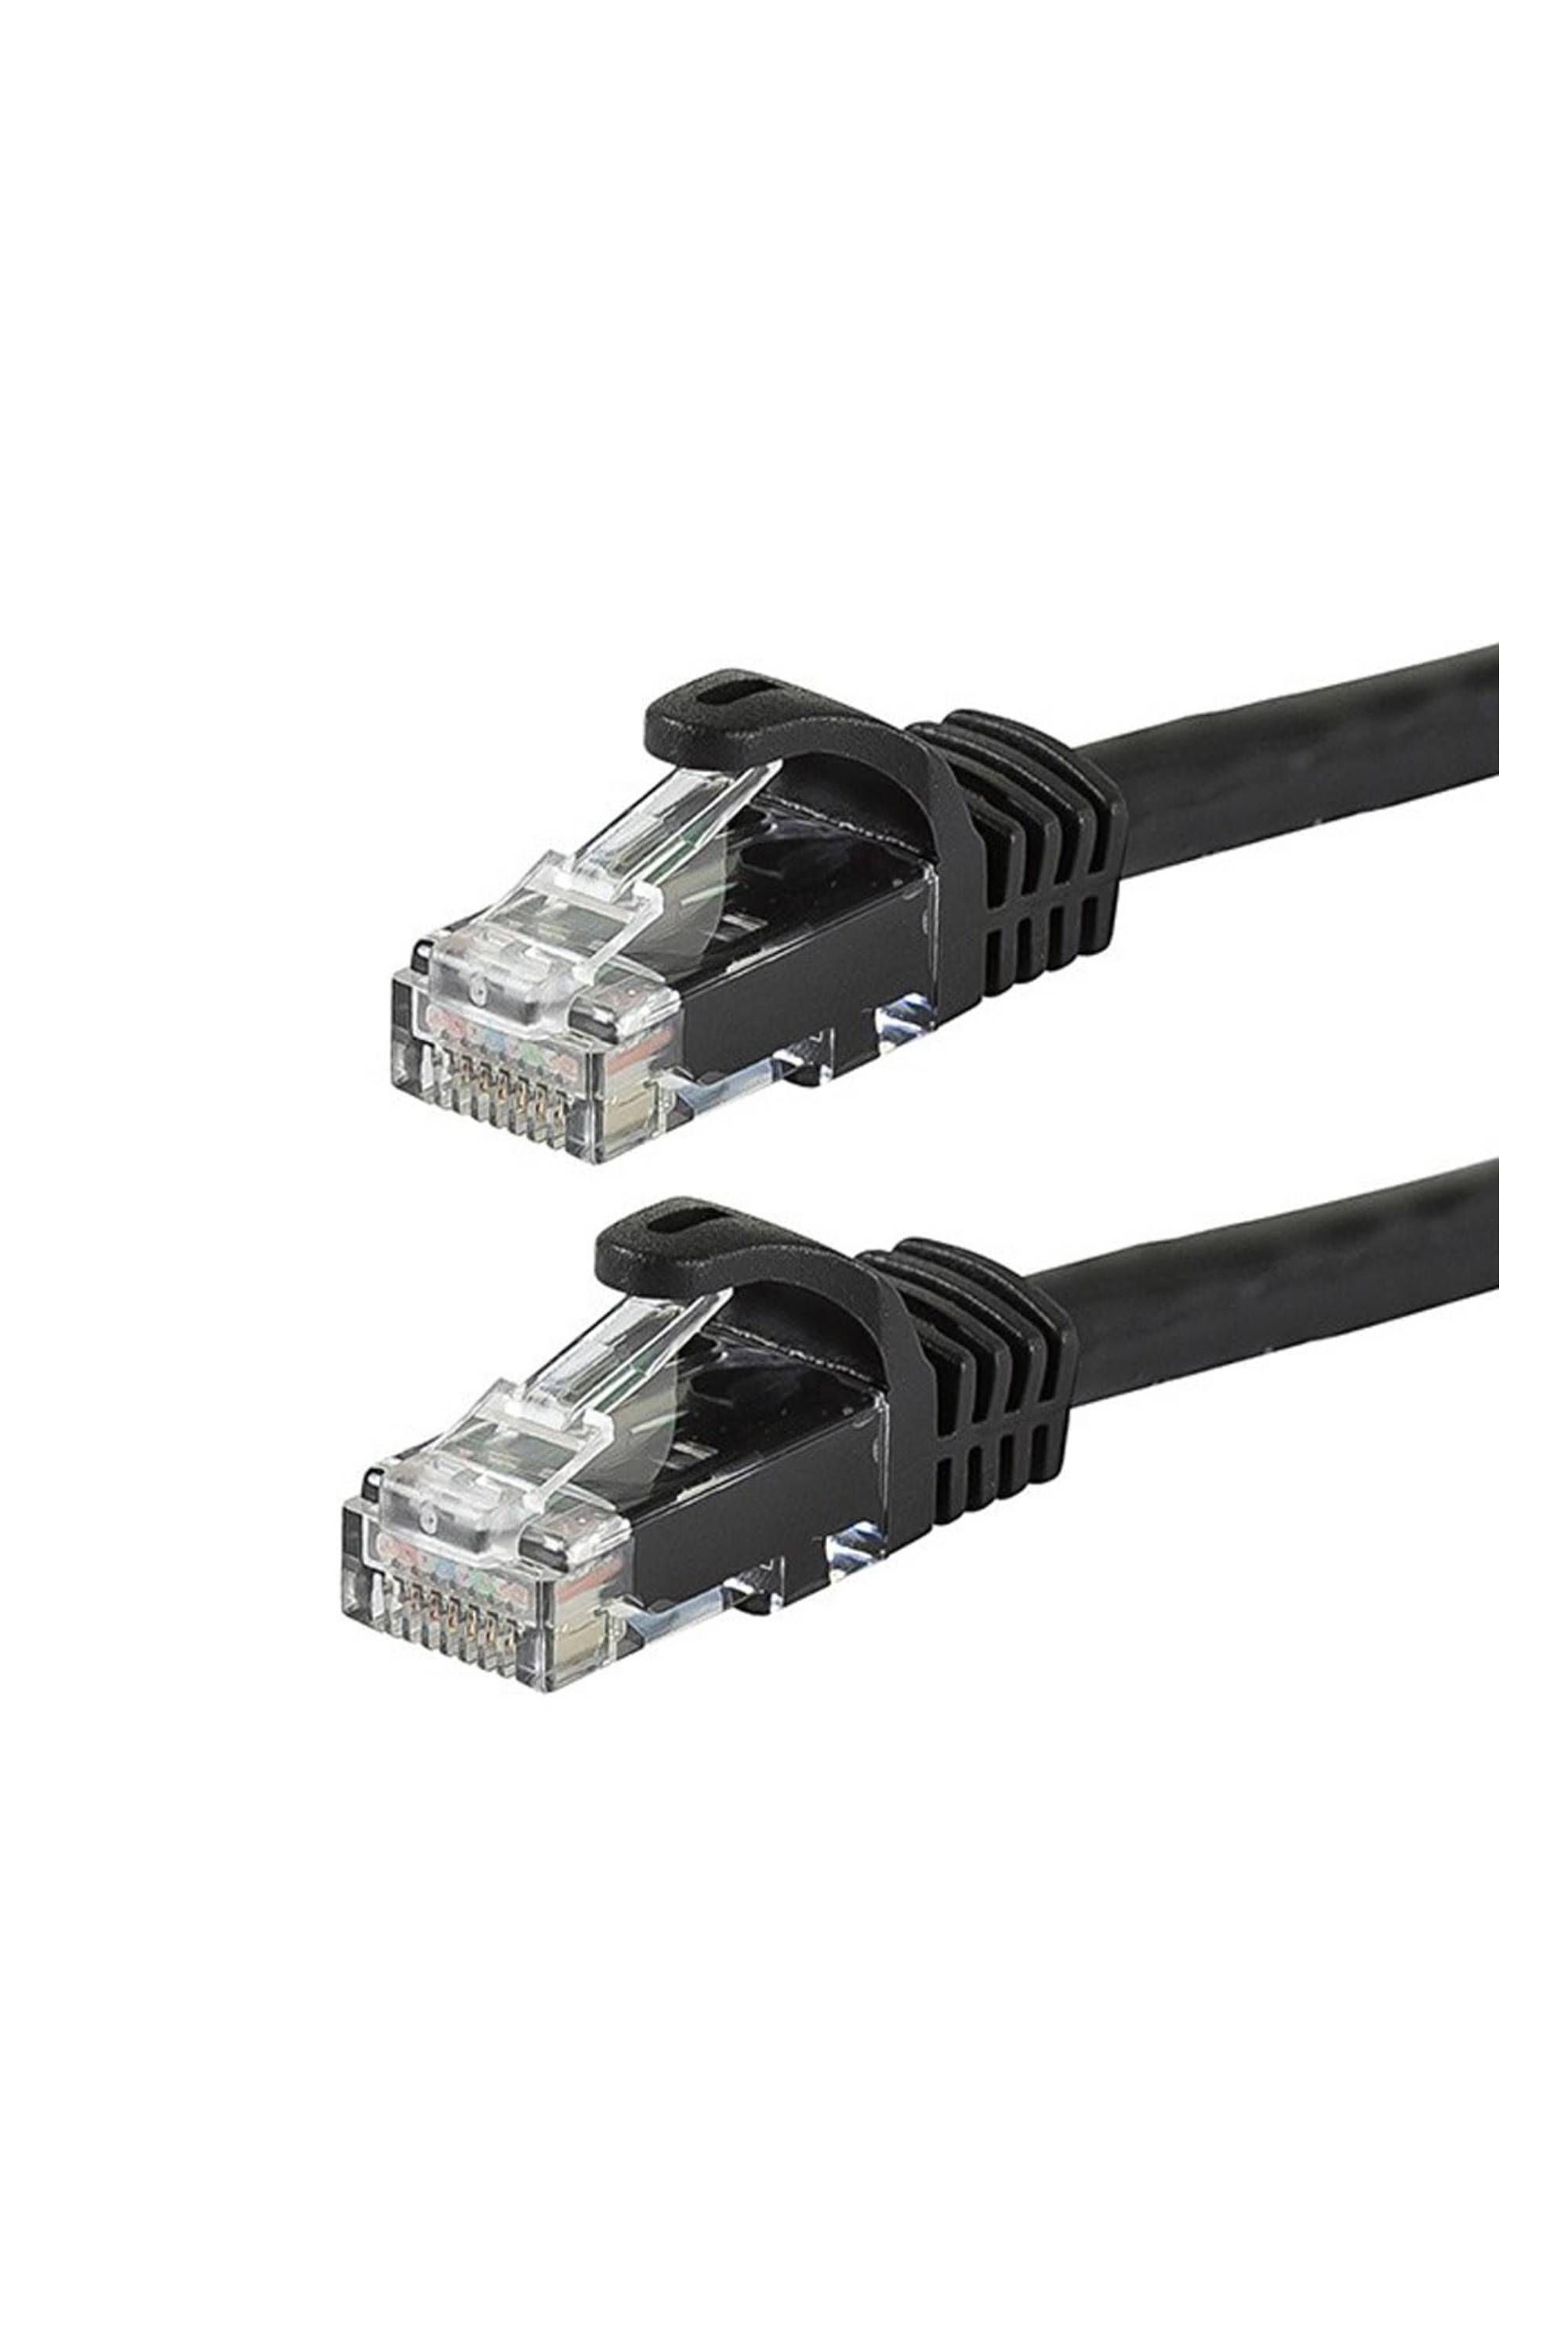 Monoprice 10ft RJ45 Cat 6 Ethernet Patch Cable